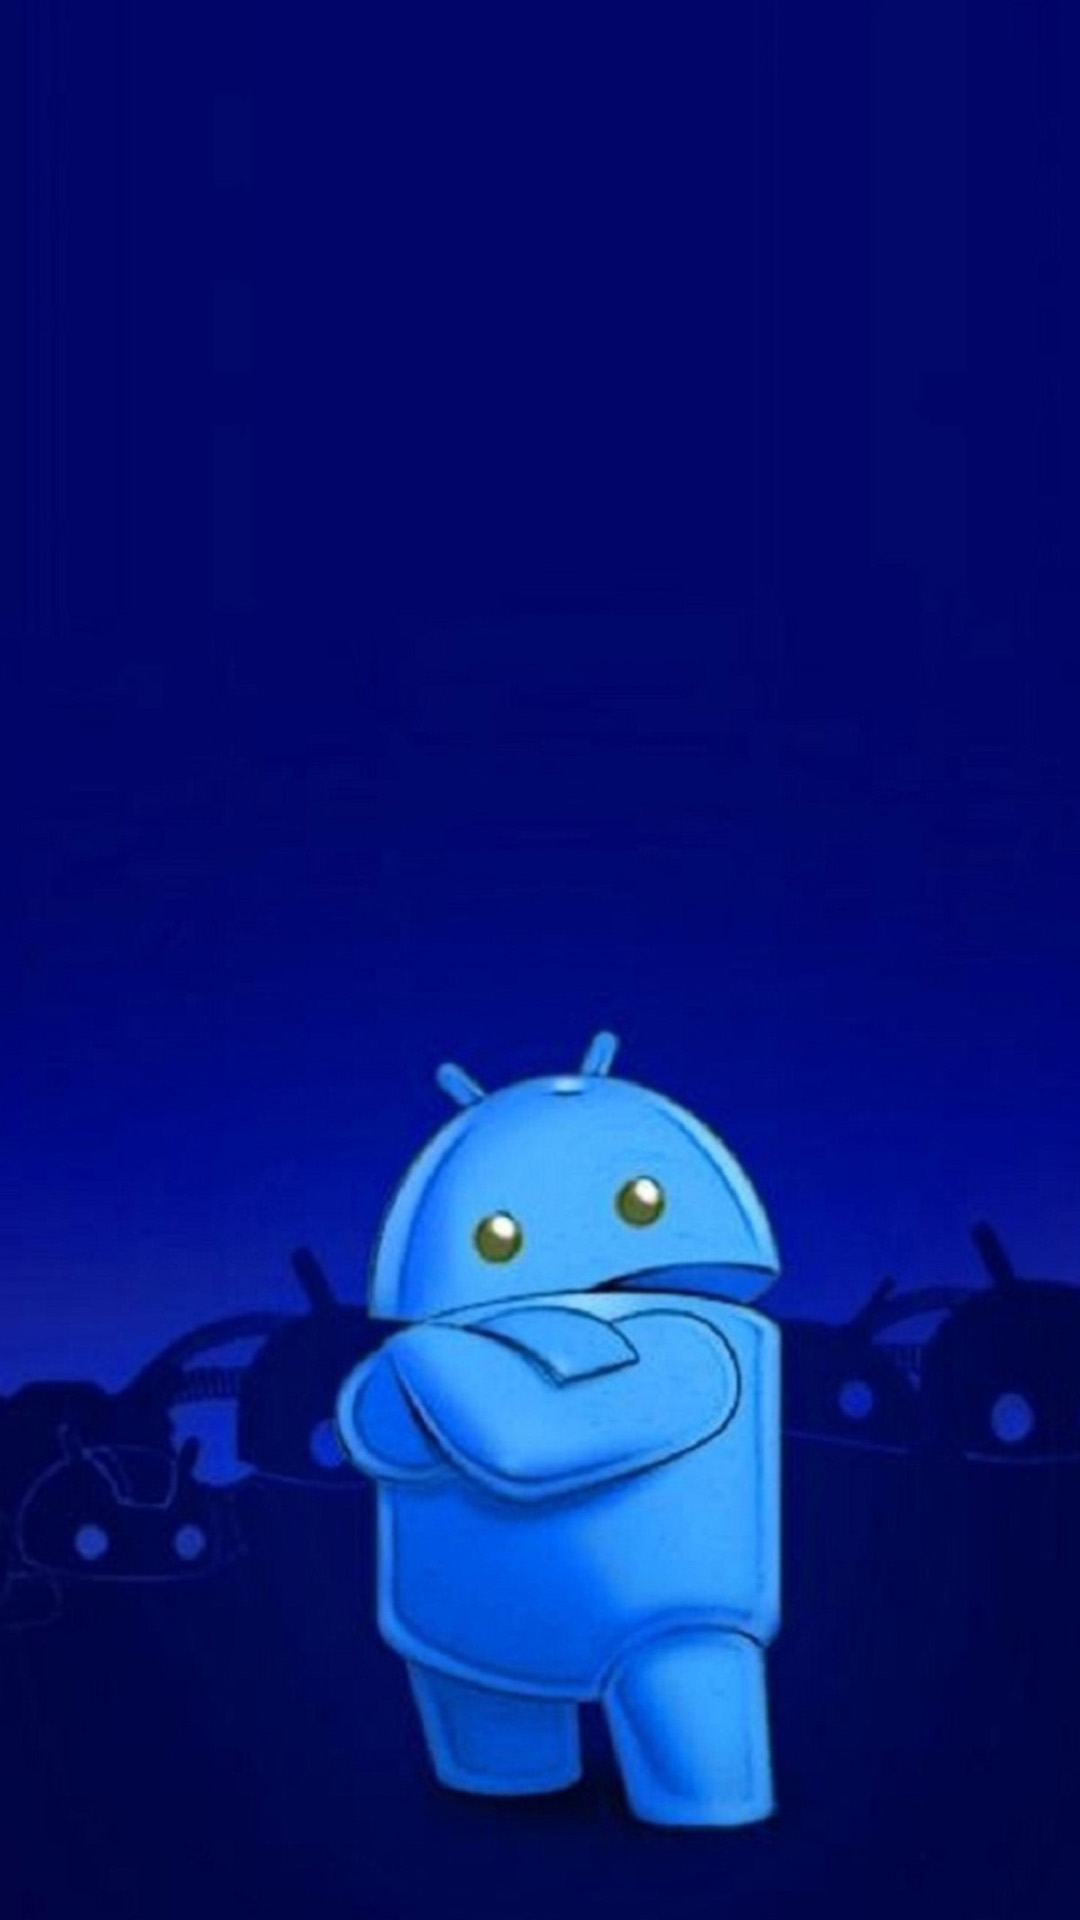 Blue Android Logo Galaxy S5 Wallpaper HD